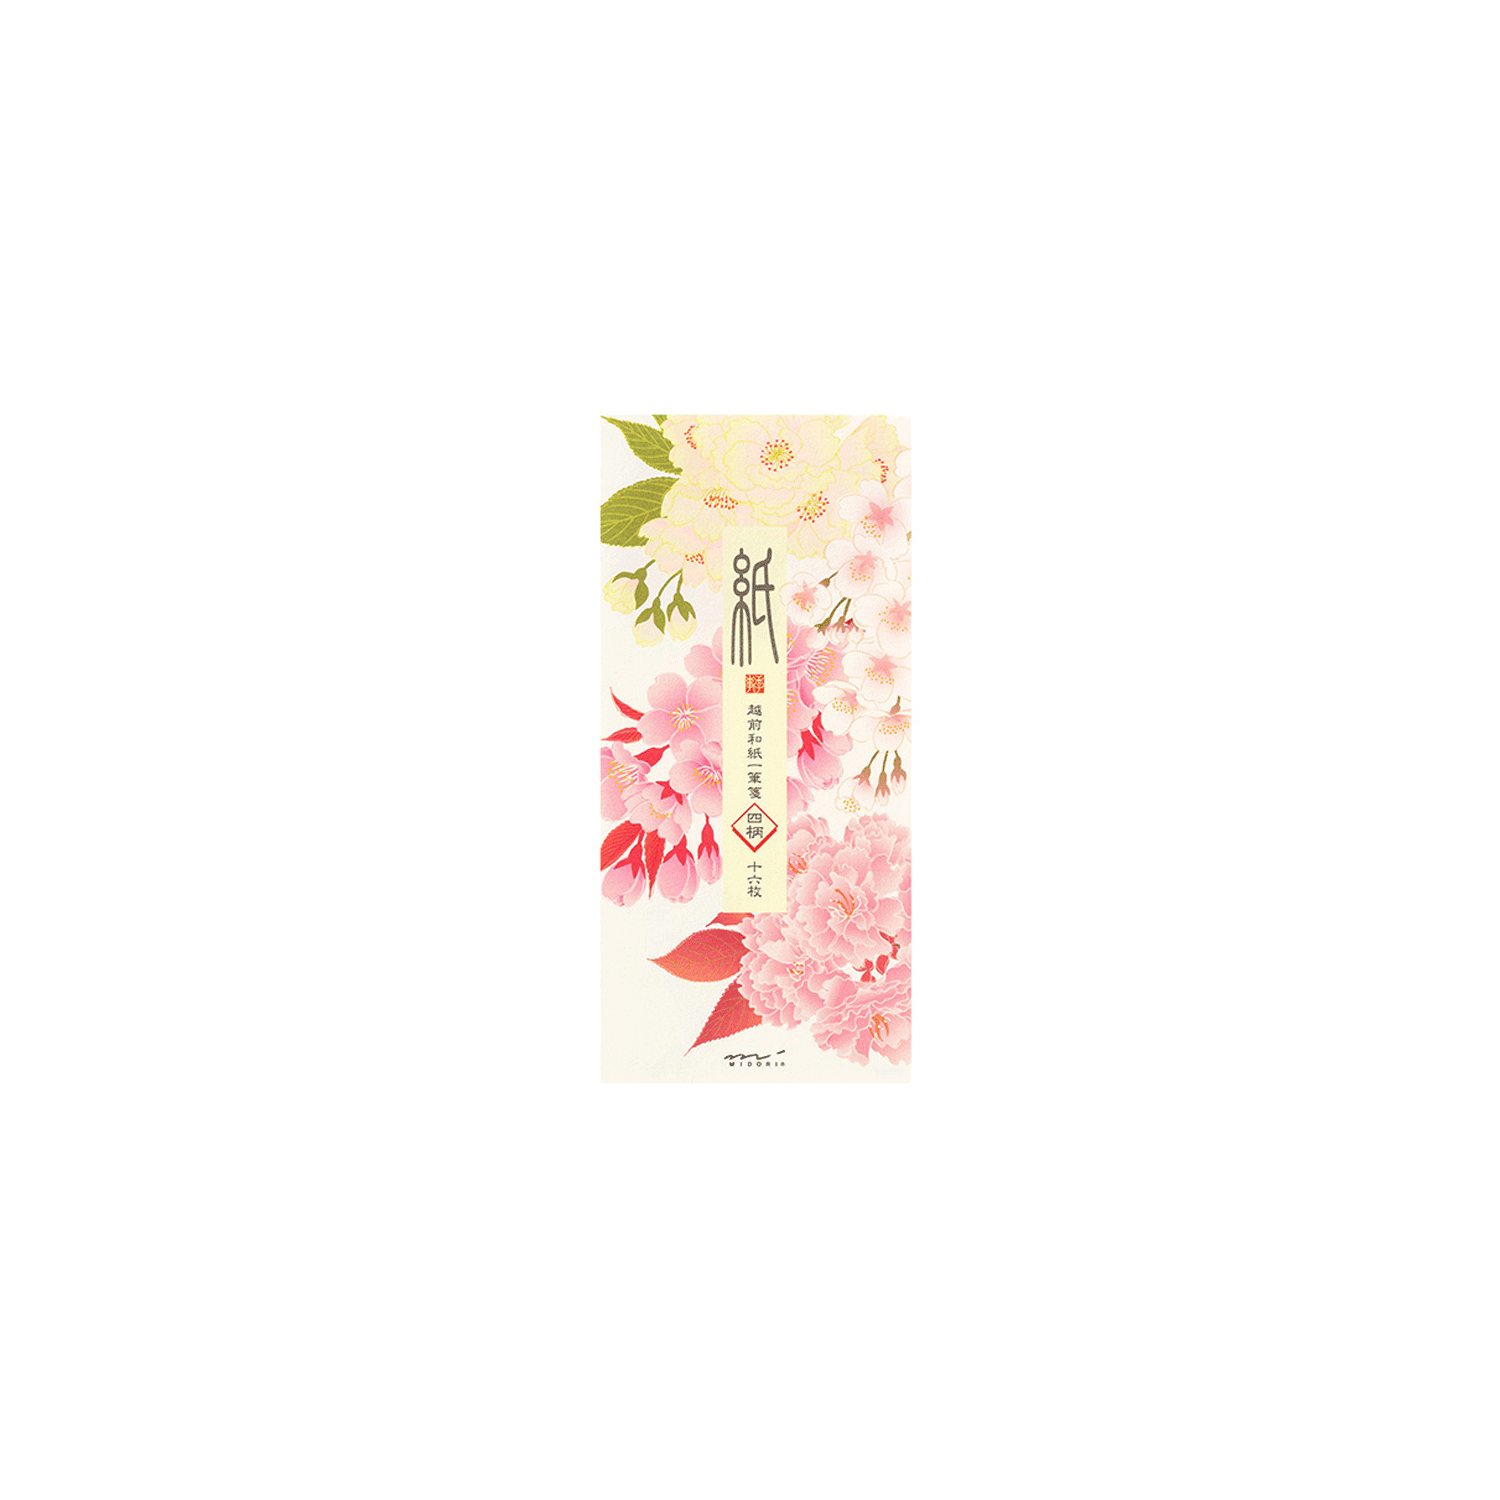 16.3 Cherry Blossom Japanese message letter pad * Midori